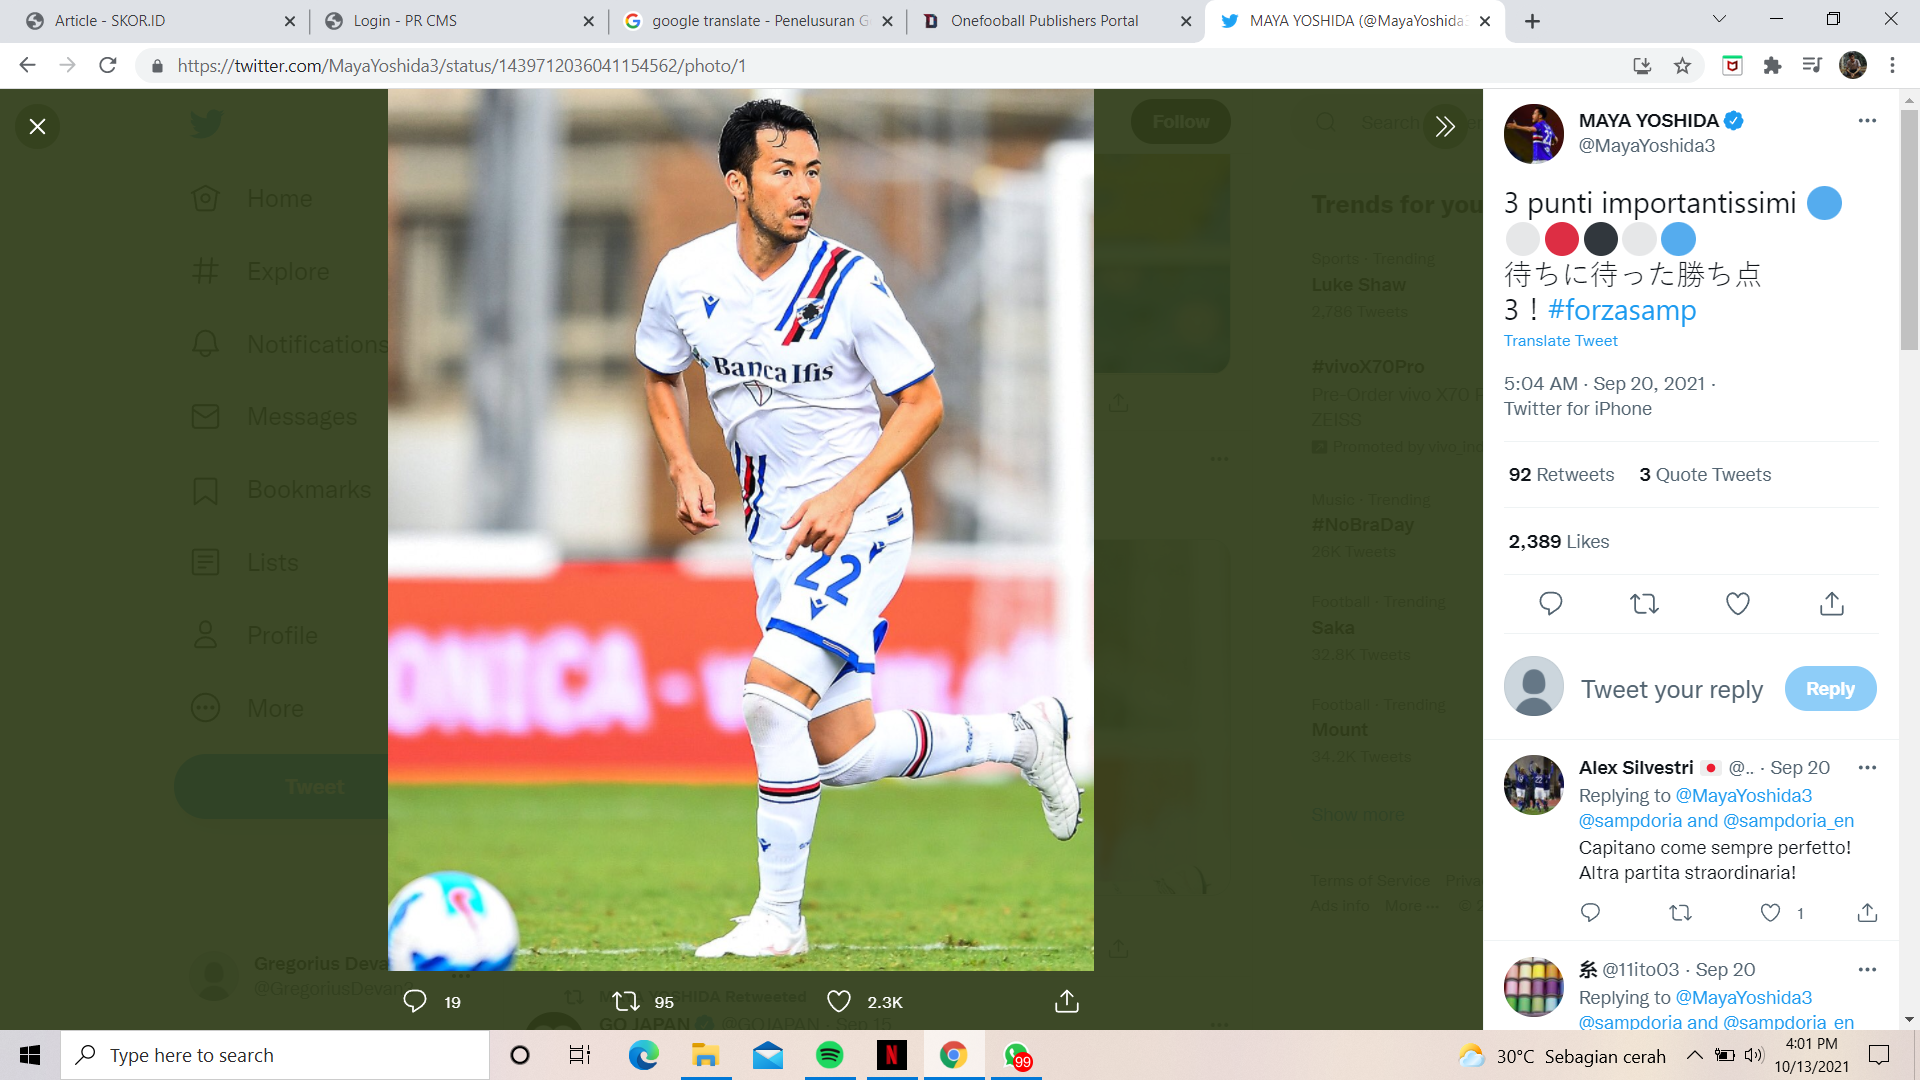 Kontrak Maya Yoshida di Sampdoria Hampir Habis, 2 Klub J.League Memantau